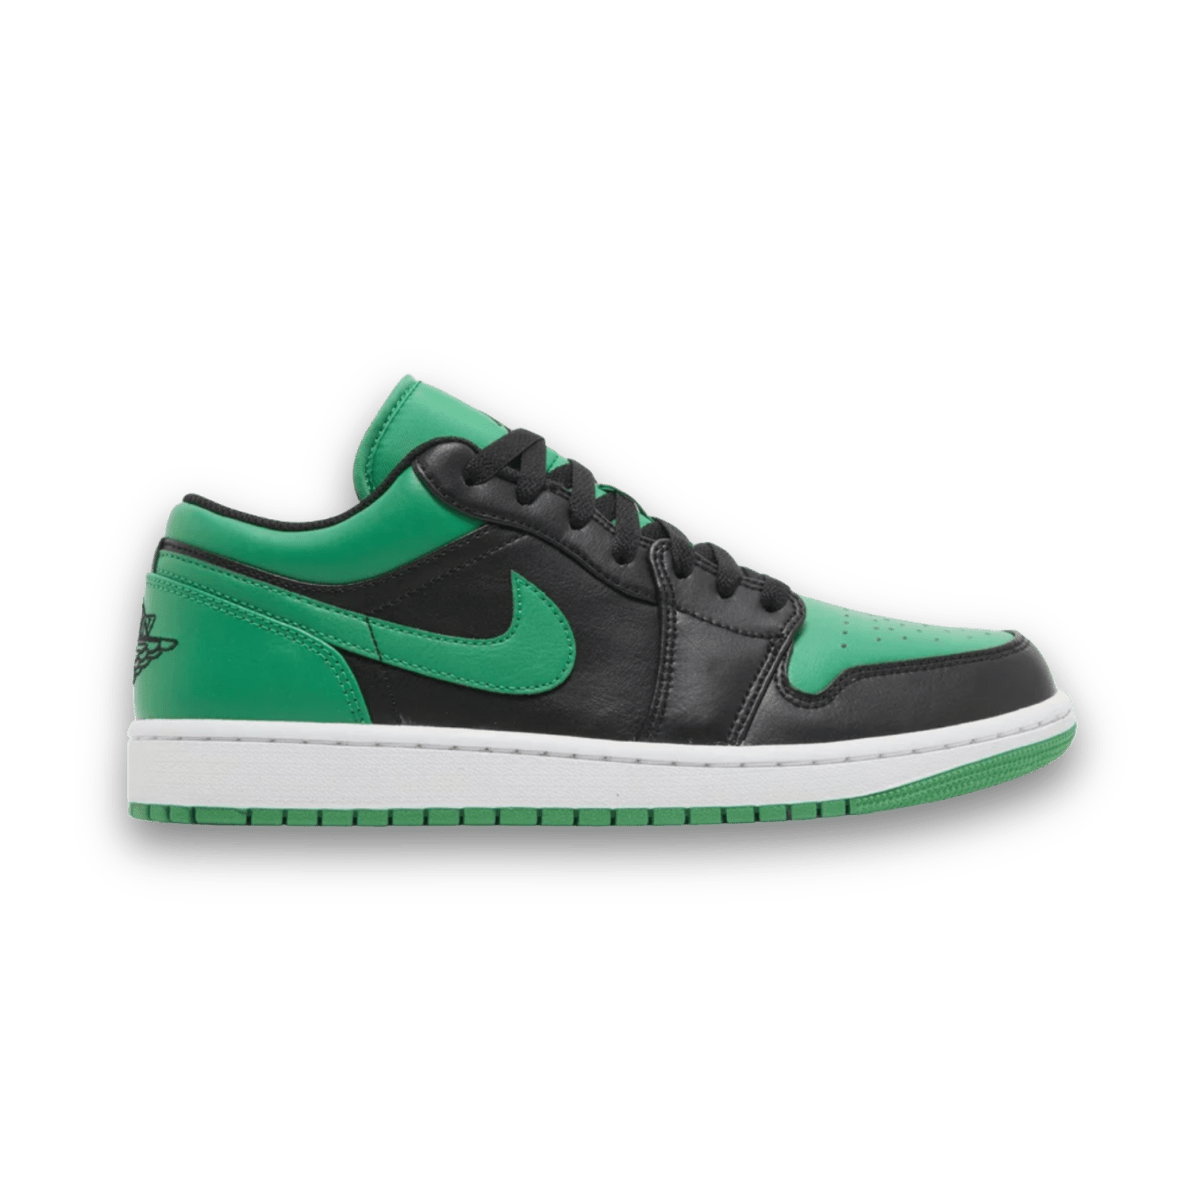 Air Jordan 1 Low 'Black Lucky Green' - Low Sneaker - Jordan - Jawns on Fire - sneakers